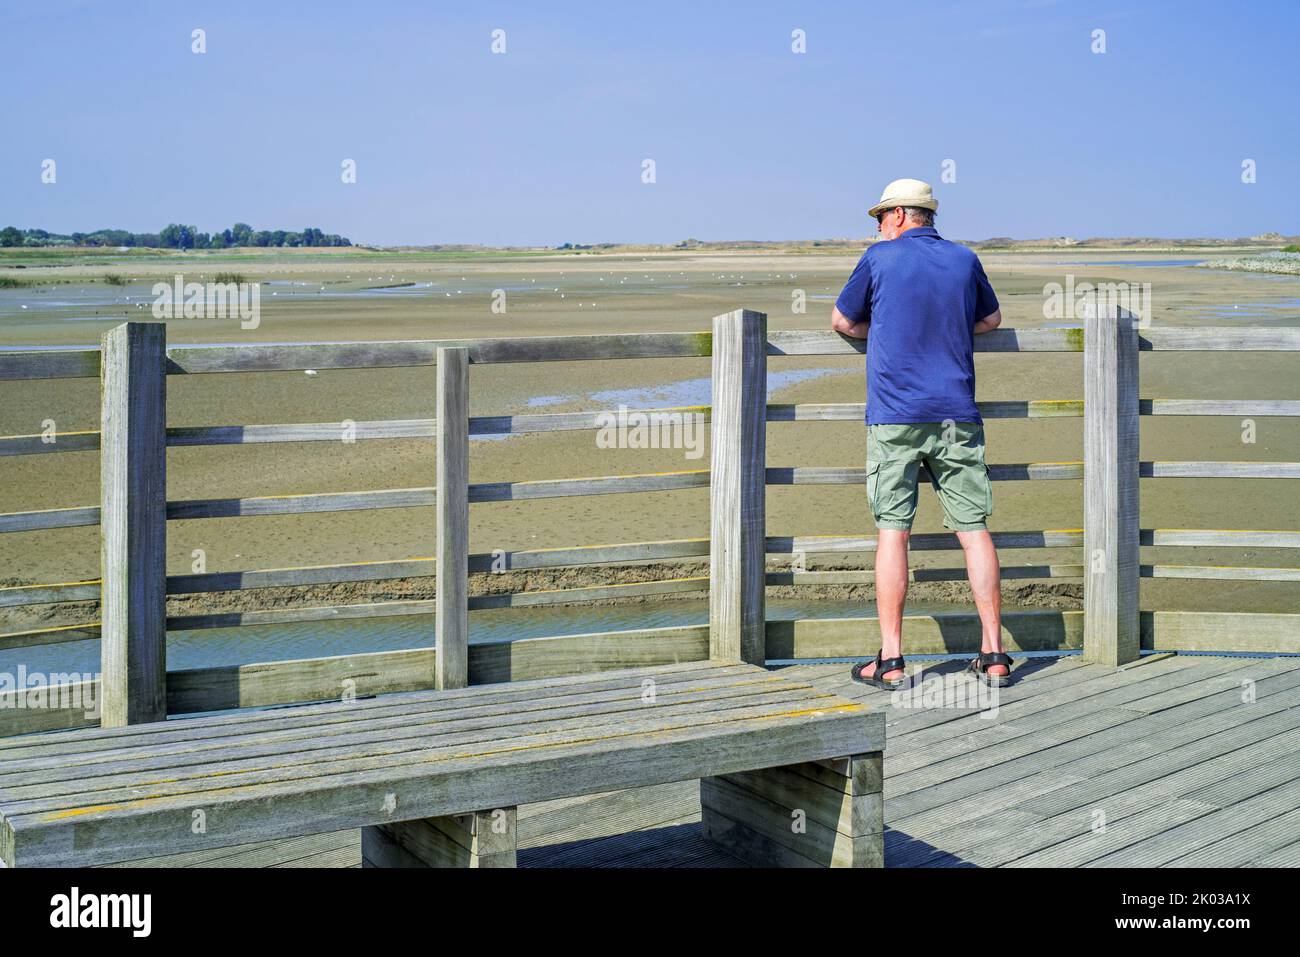 Elderly tourist / walker on wooden lookout platform, vantage point offering view over saltmarsh and coastal birds at Zwin nature reserve, Belgium Stock Photo